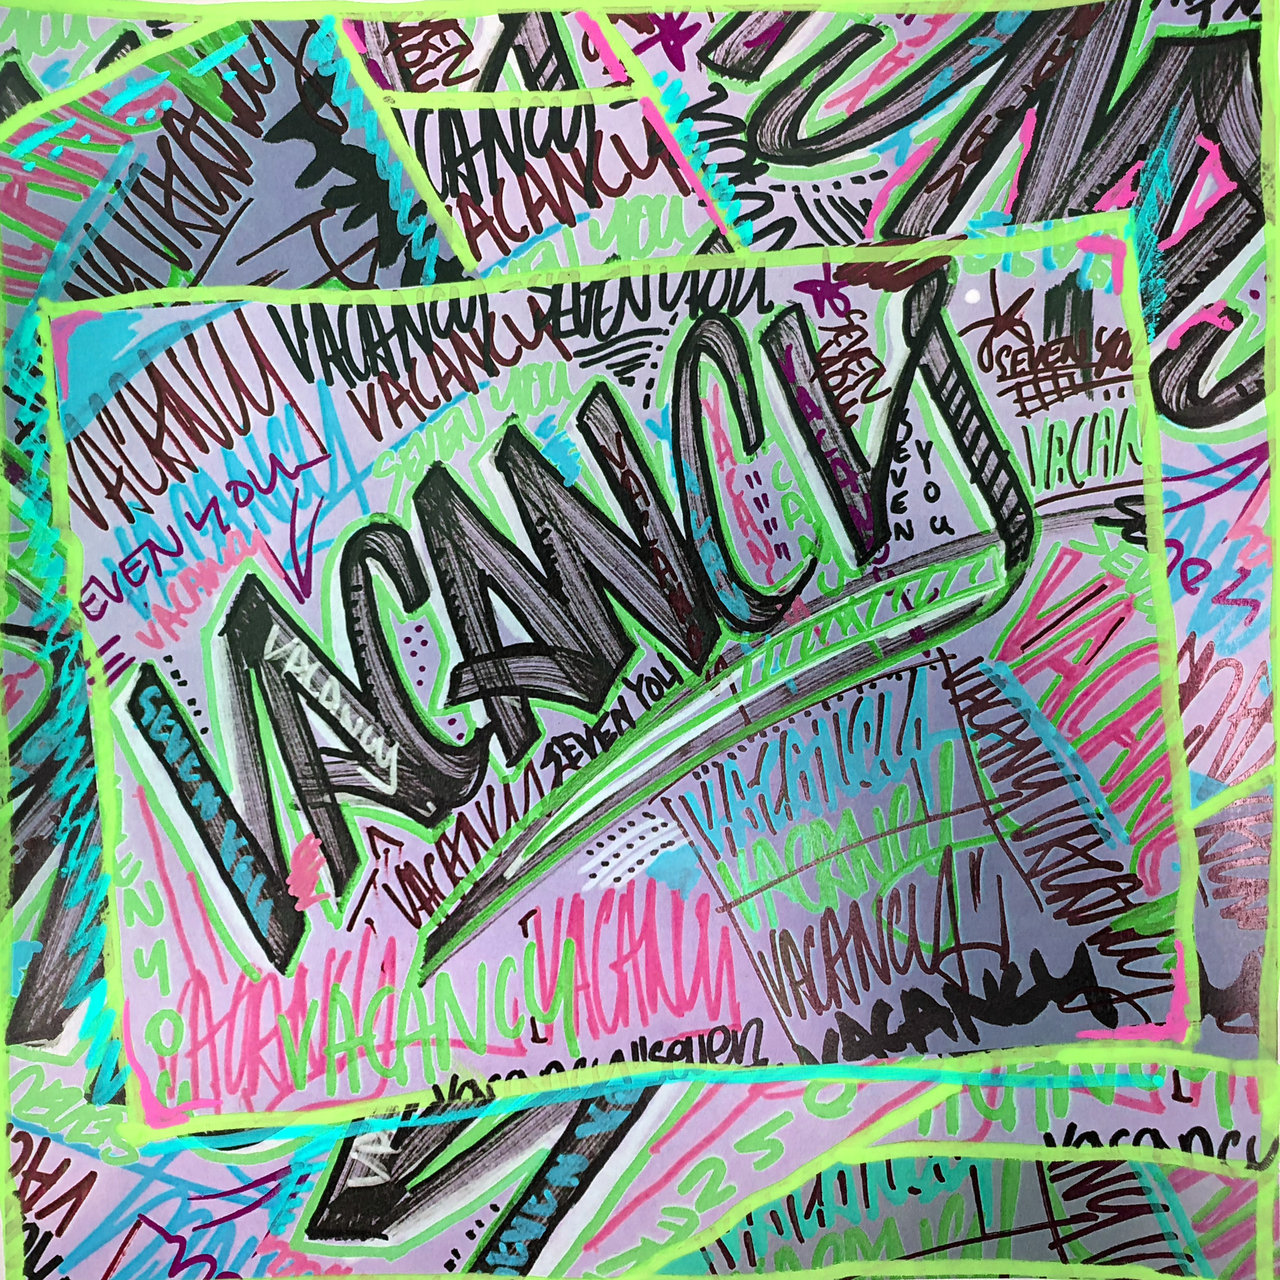 Vacancy featuring Mia Pfirrman — Seven You cover artwork